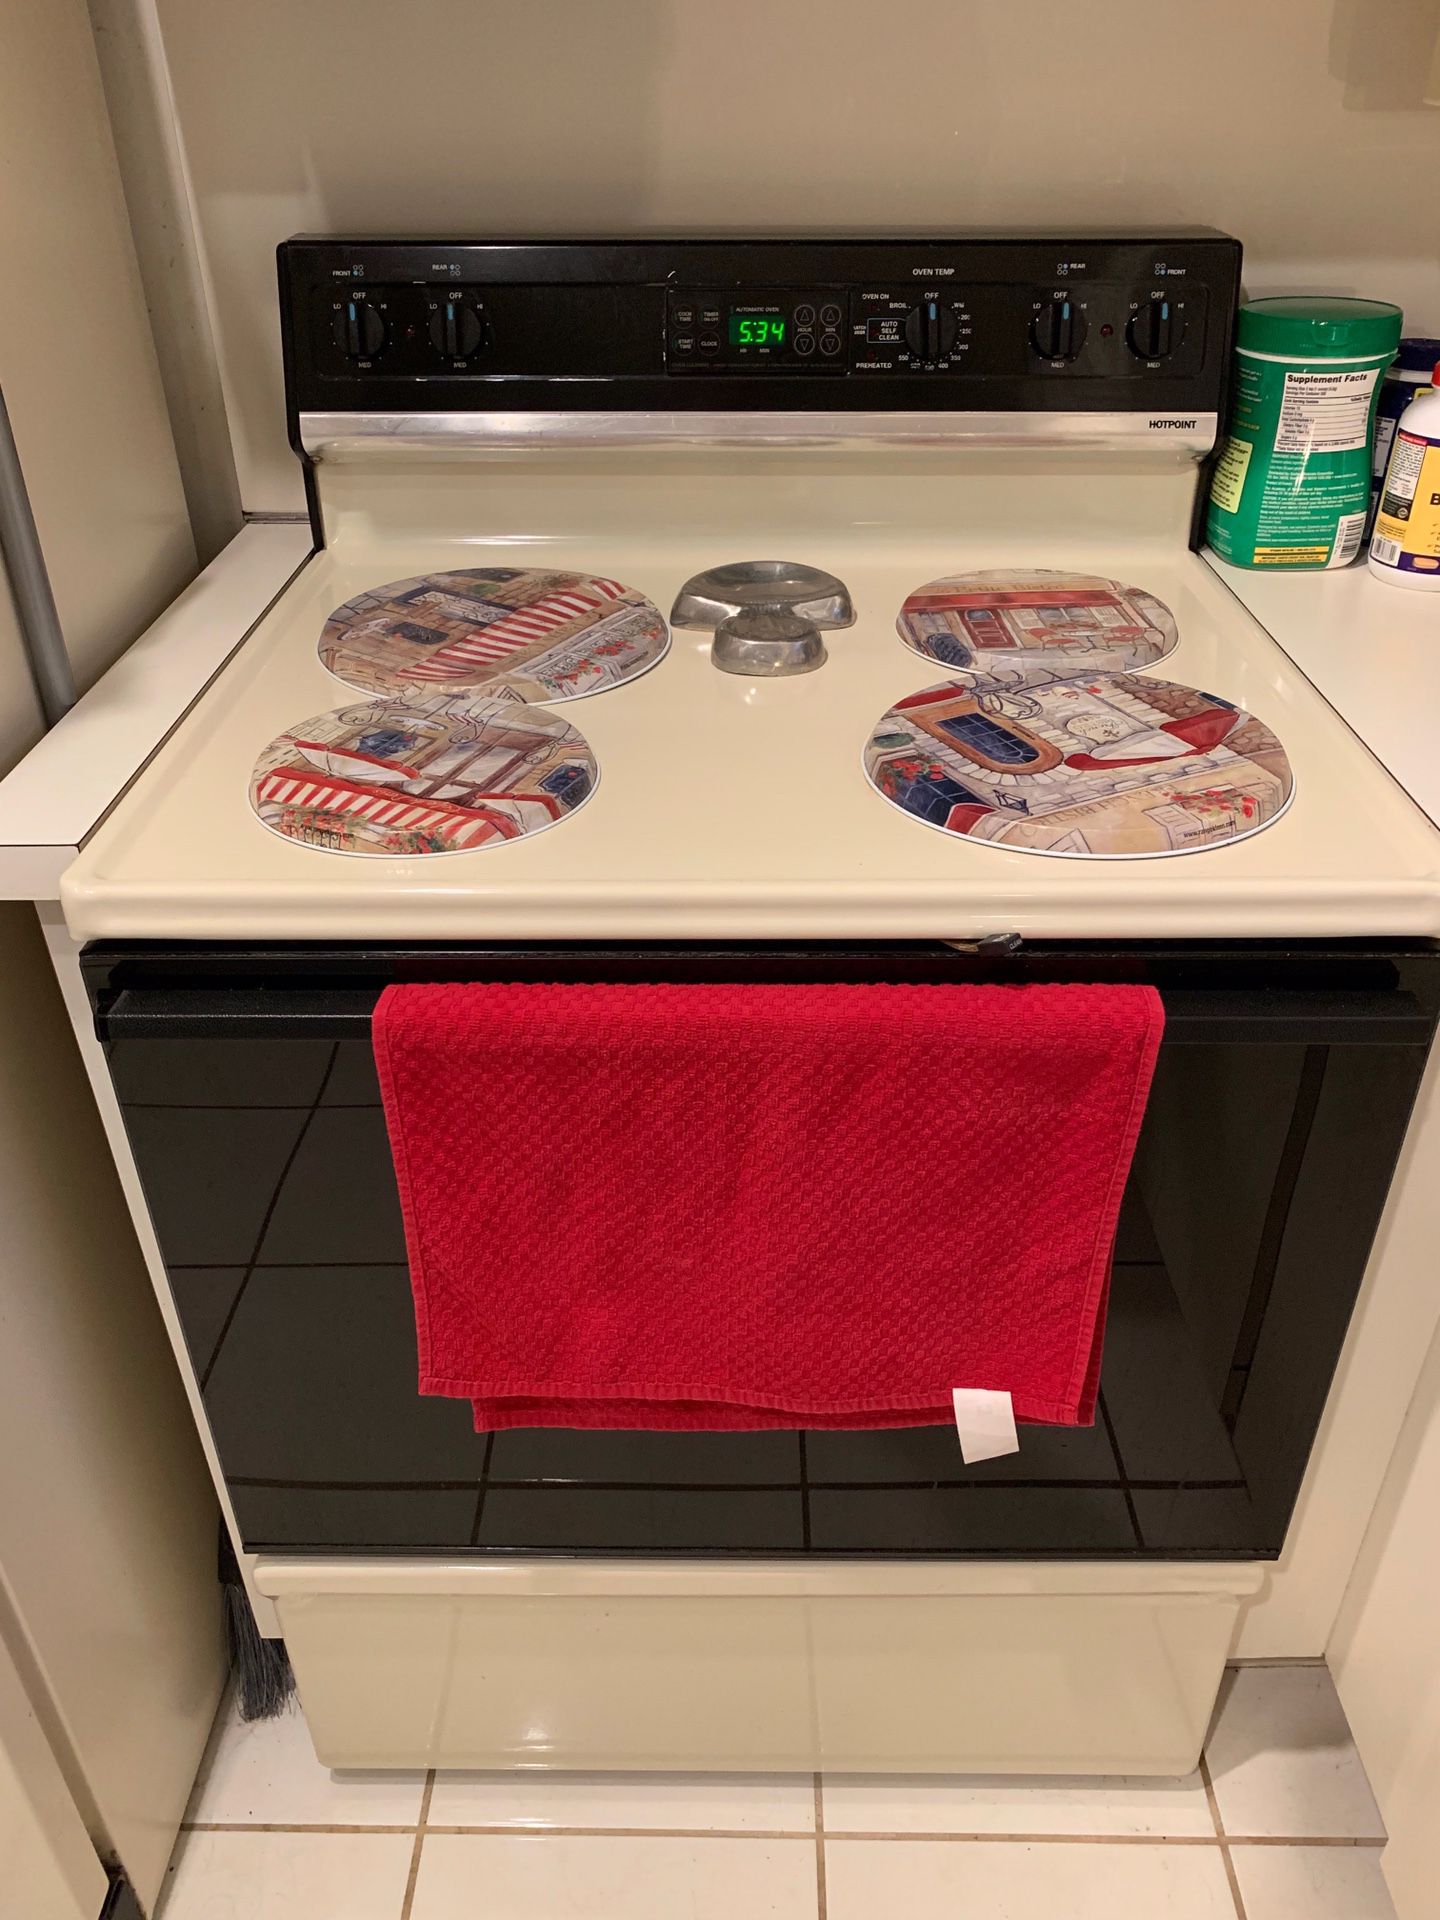 *FREE* Stove - Dishwasher - Over Stove Microwave *FREE*